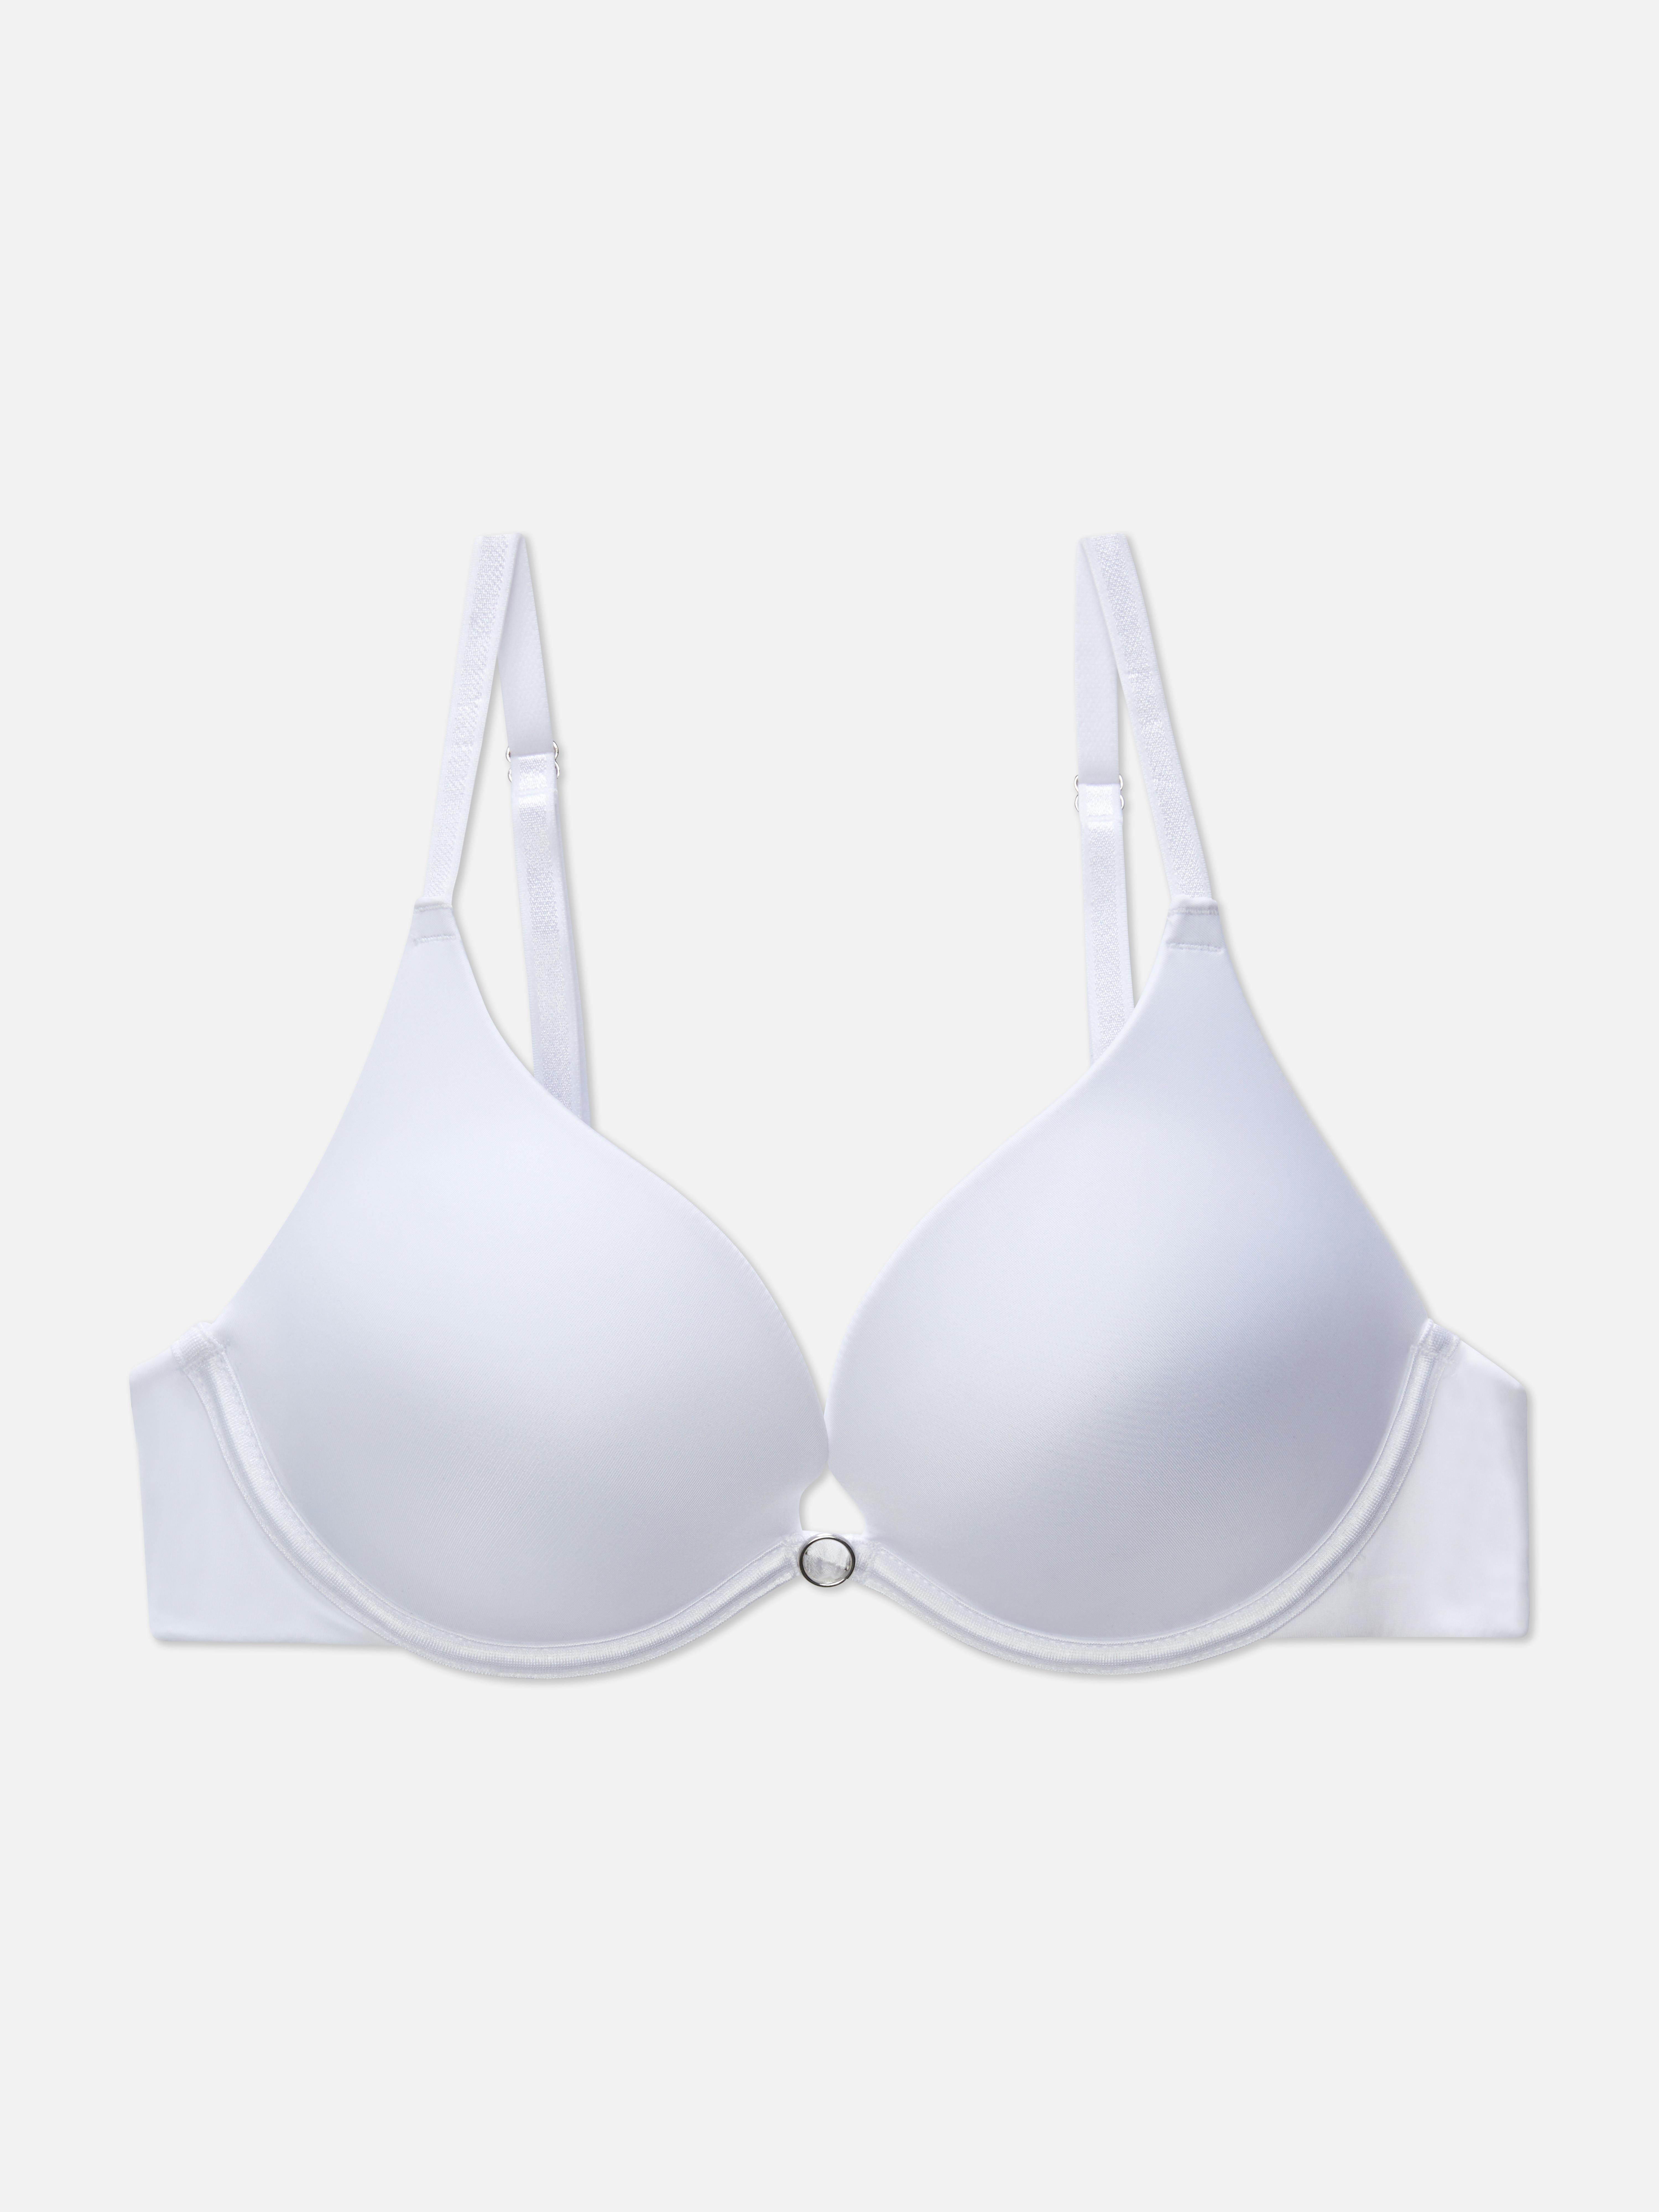 Feyre - Bikini Shape Breast Push-Up Insert Bra Pads, Bra Pads, Wireless  Bra, Push-Up Bra Pads